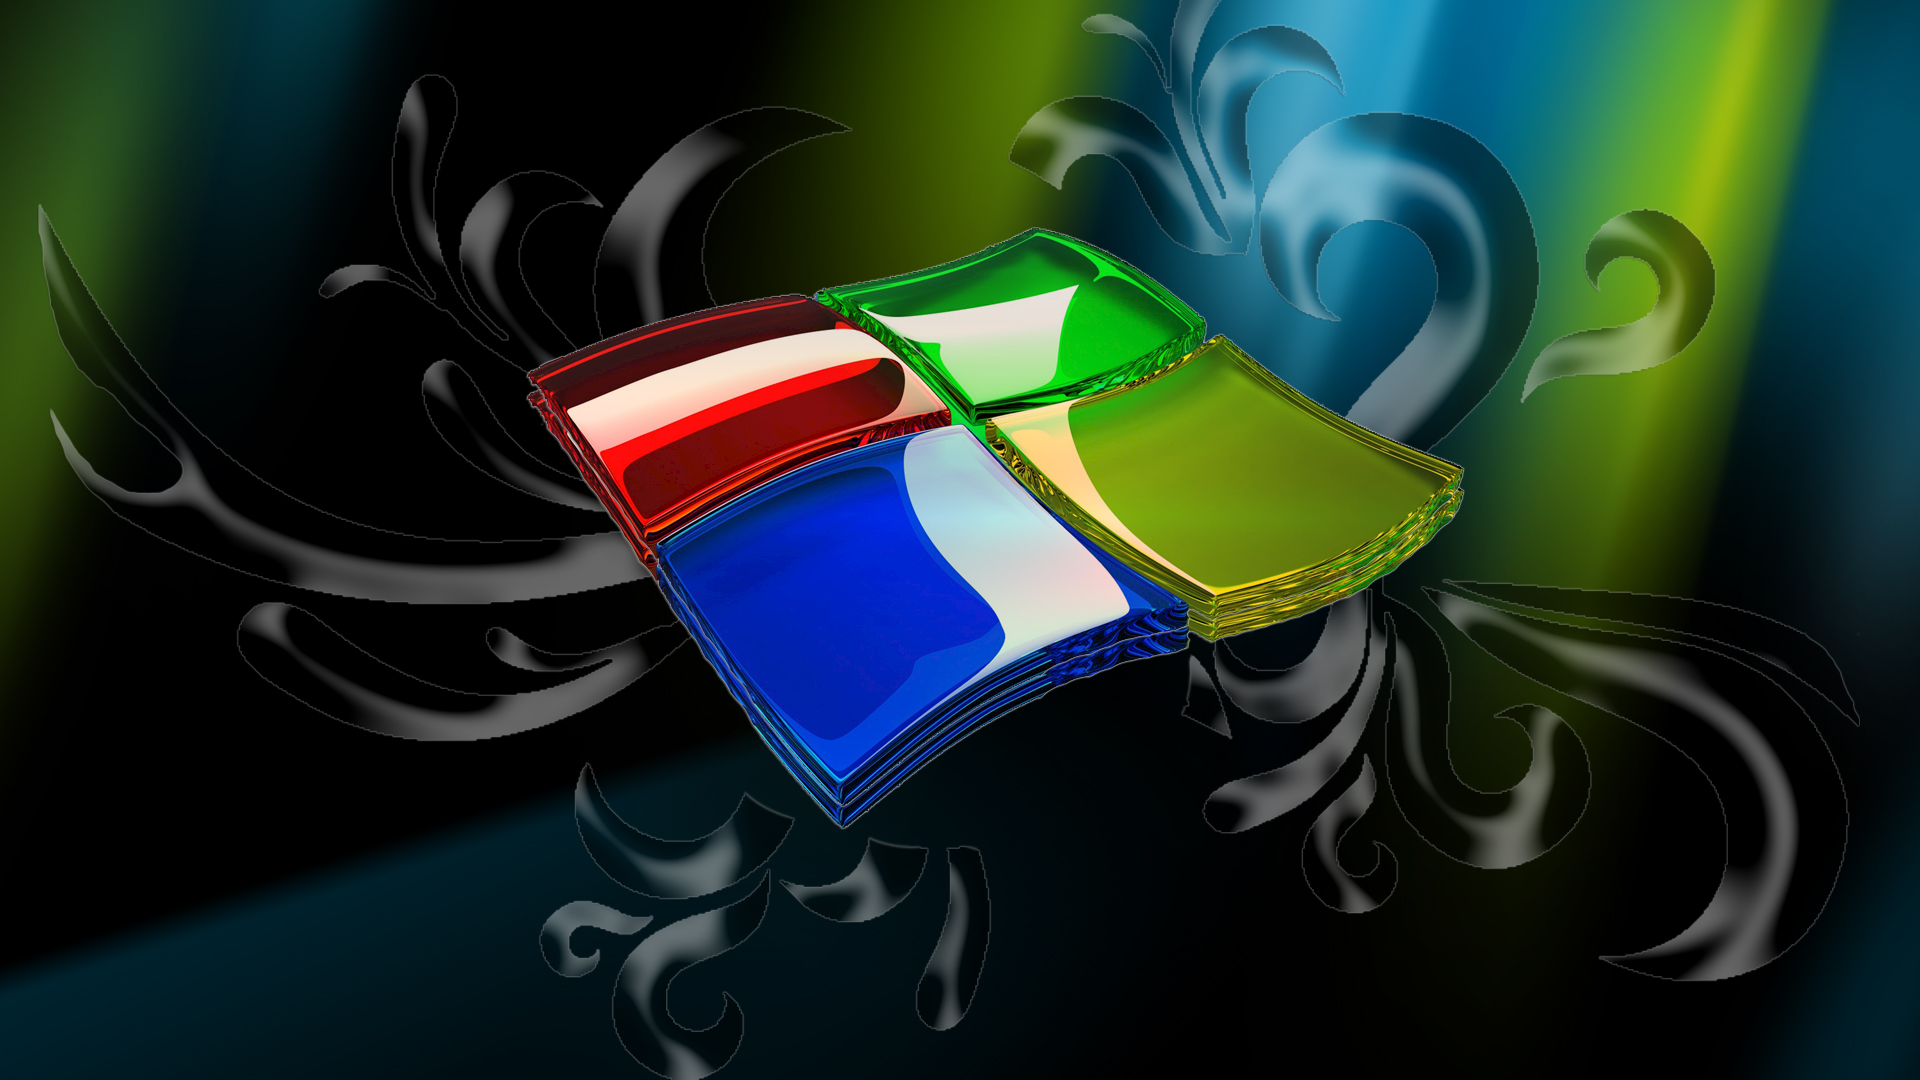 Windows 7 3D wallpaper by Topas2012 on DeviantArt